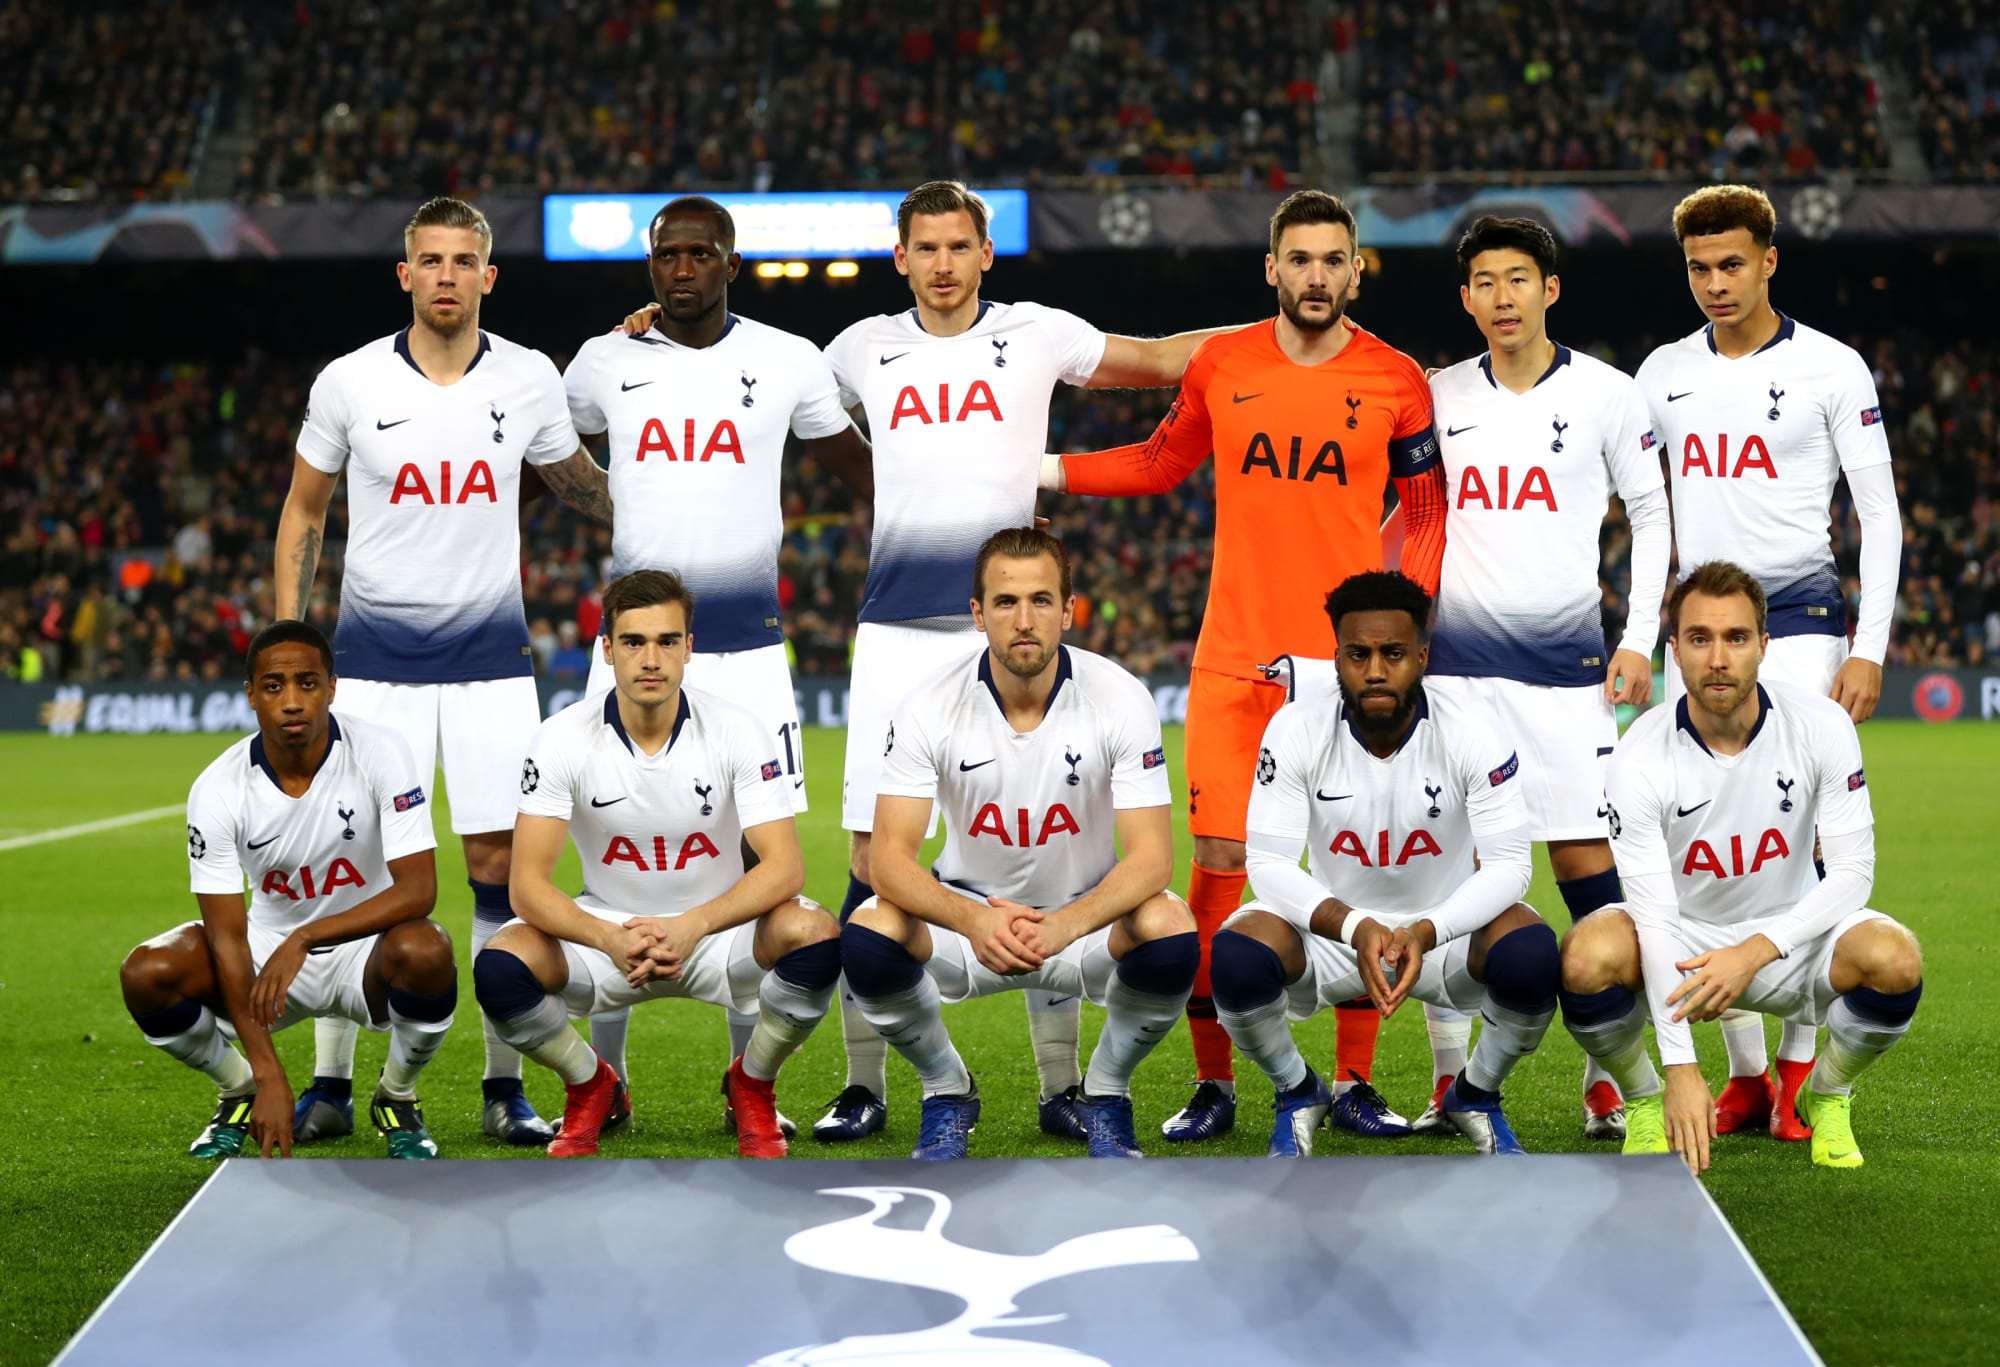 Tottenham Hotspur's UEFA Champions League Group Stage Story